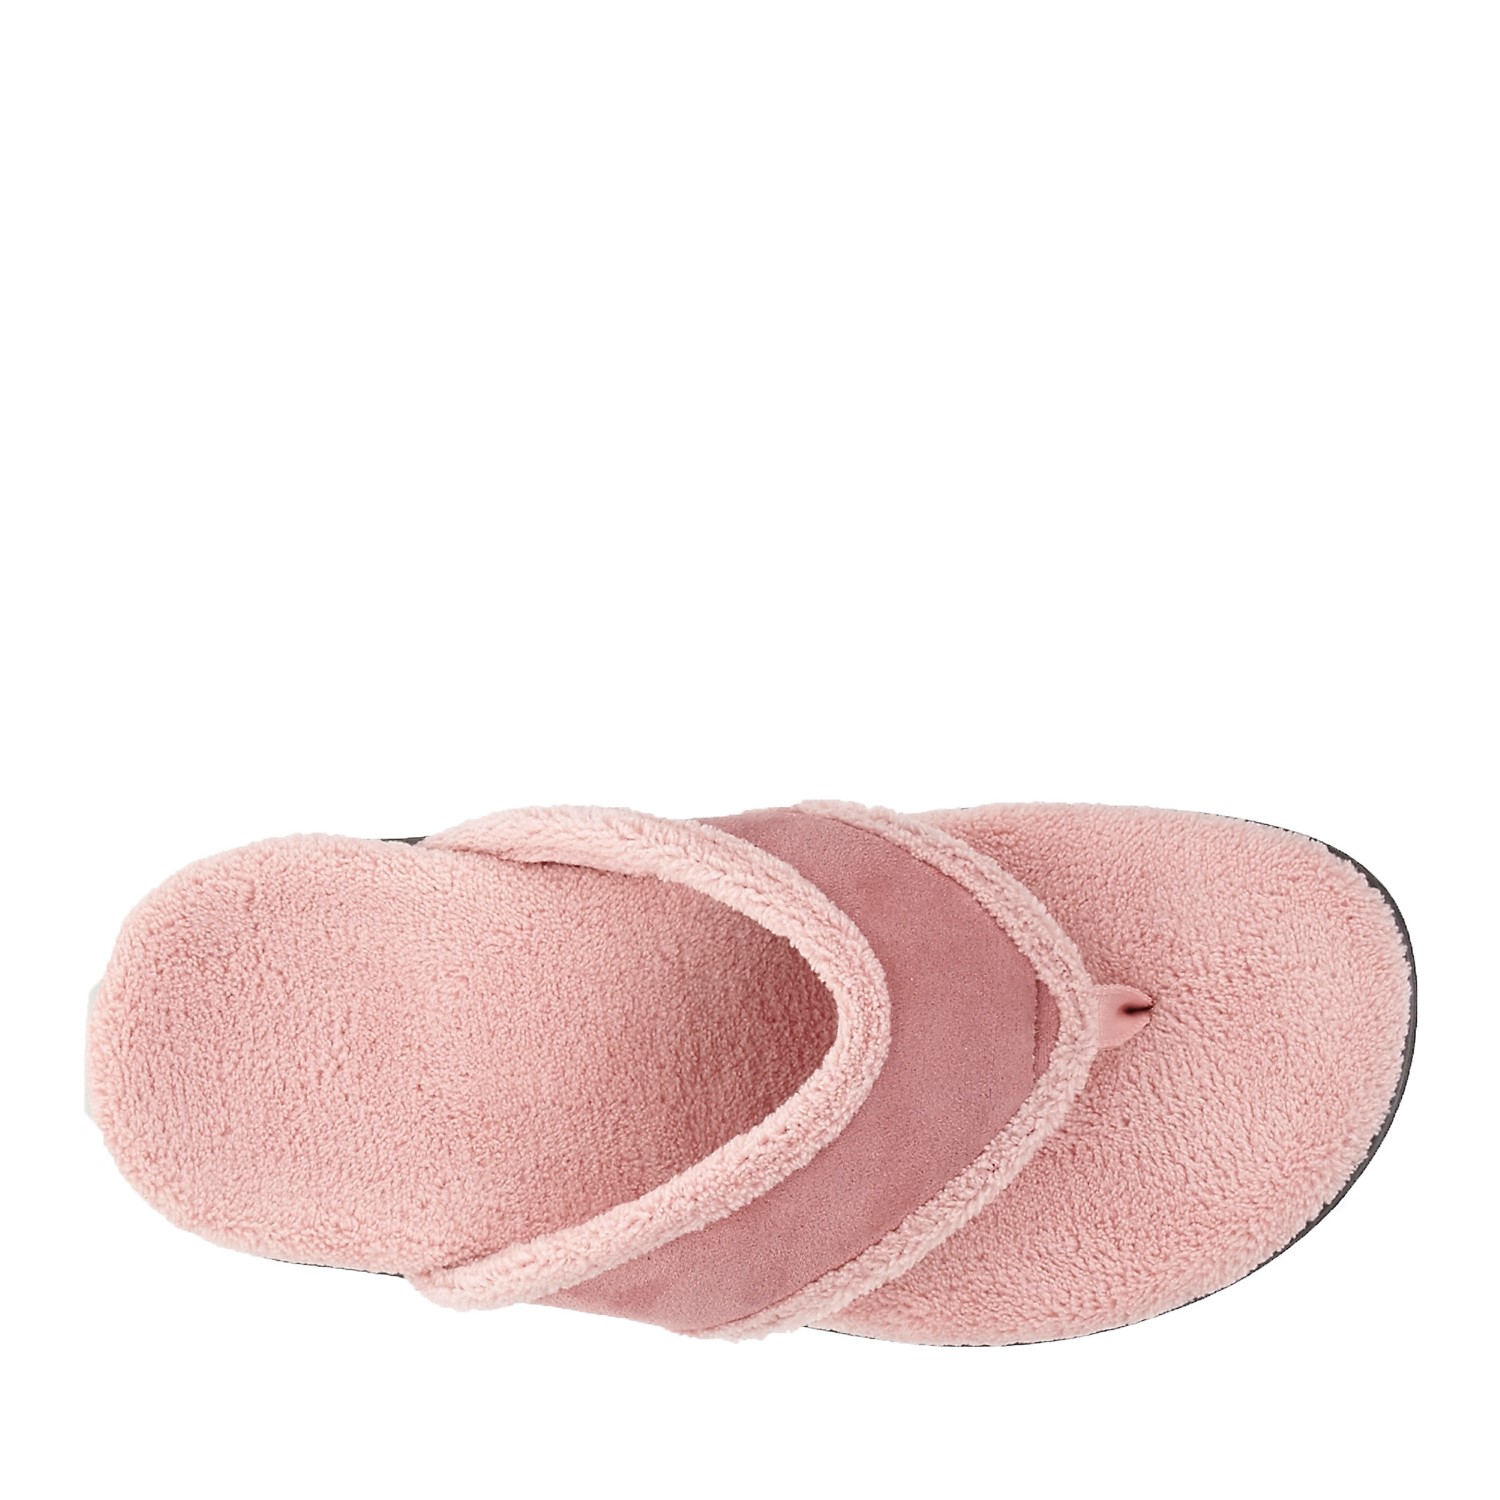 vionic bliss thong slippers